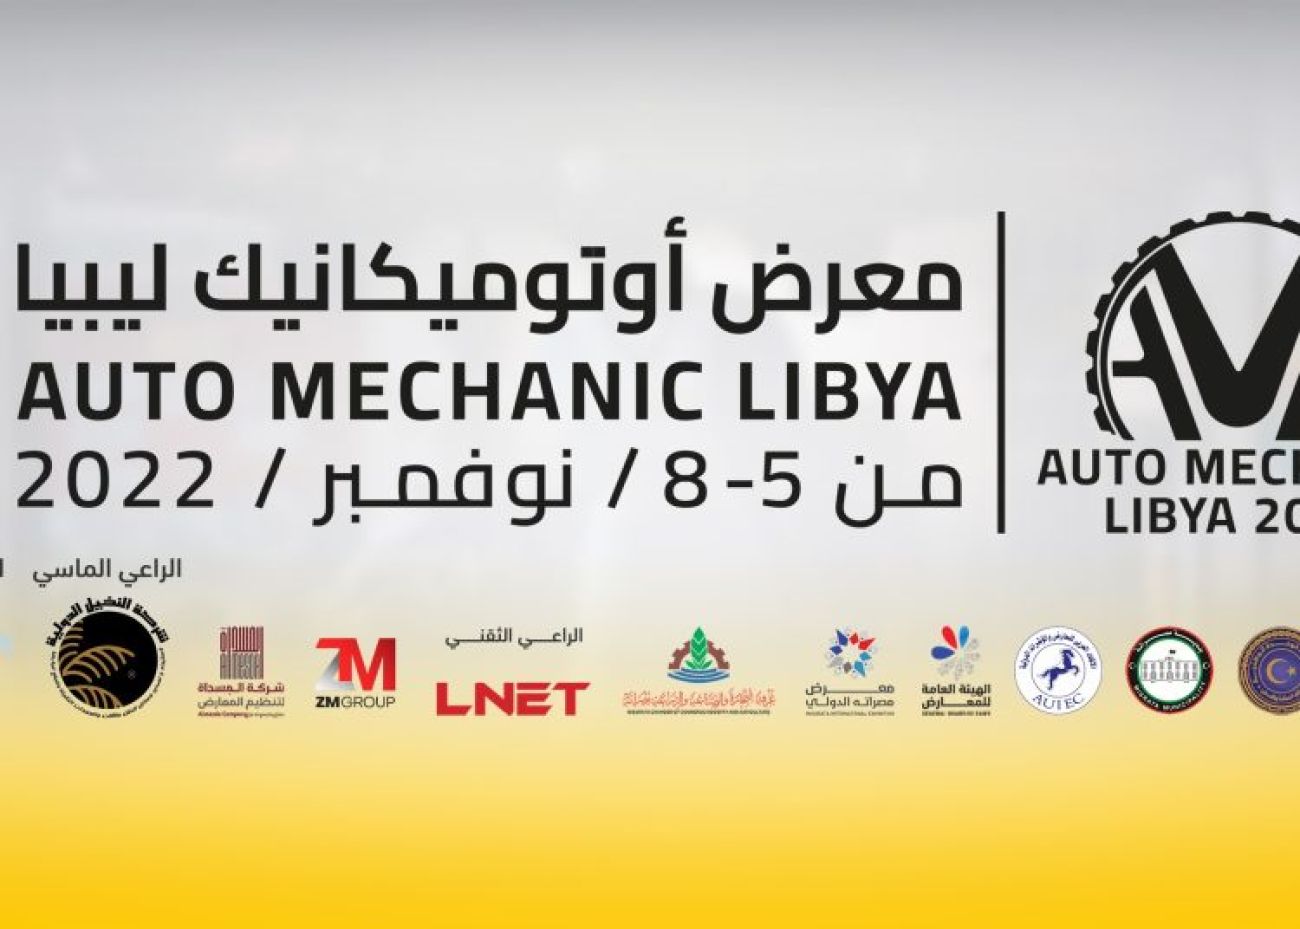 Auto-Mechanic-Libya-2022-5-to-8-November-Misrata